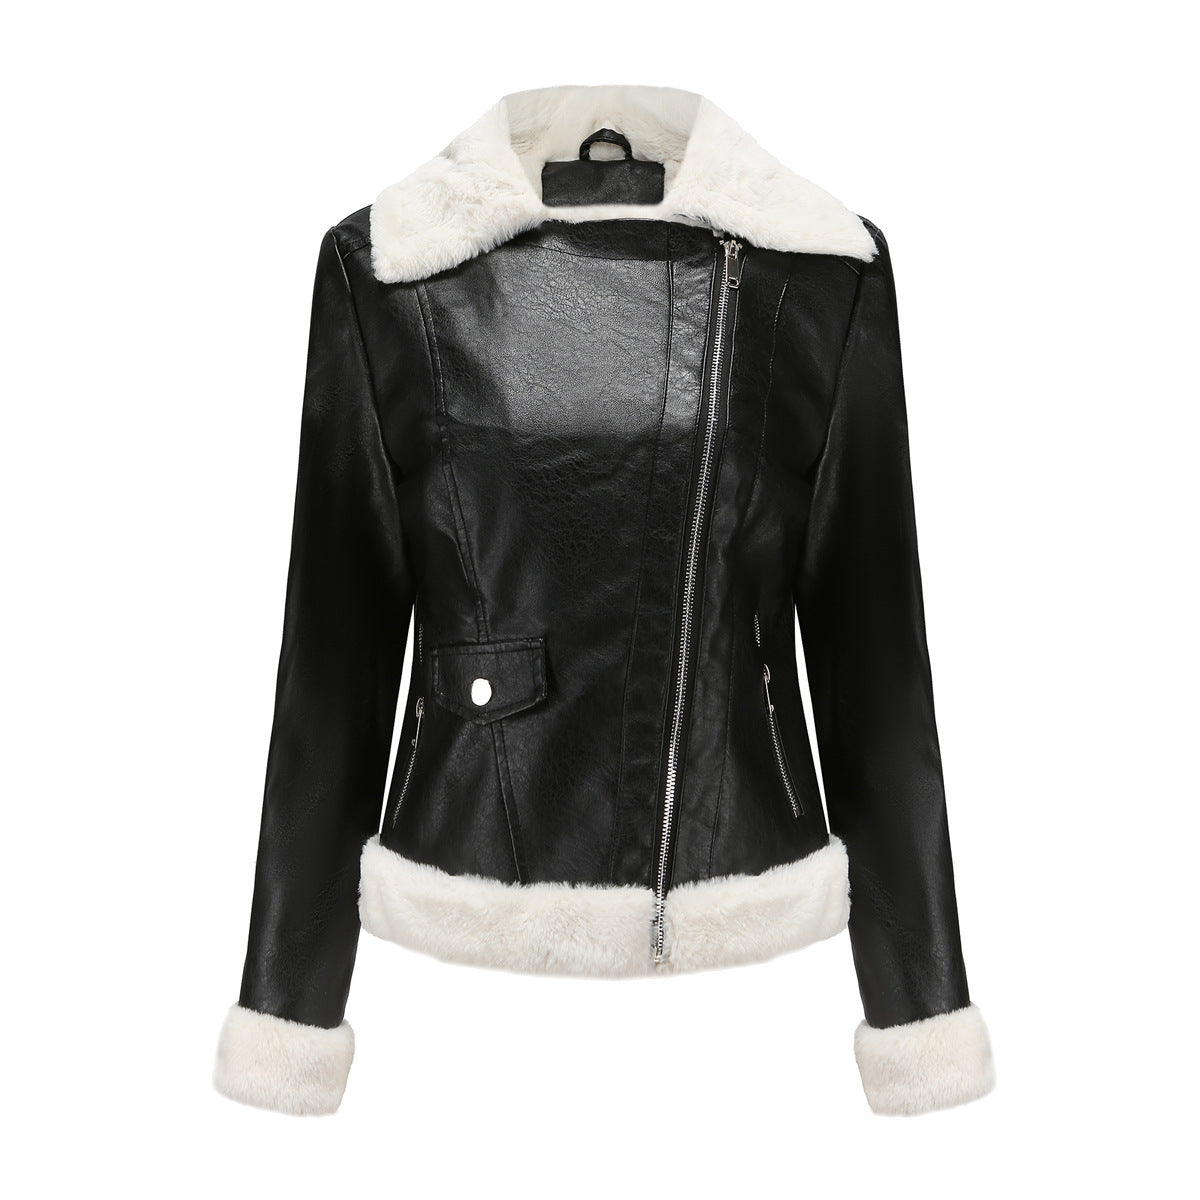 Autumn Winter Fleece Leather Jacket Women European Size Warm Long Sleeves Turn down Collar Coat Office Casual Jacket